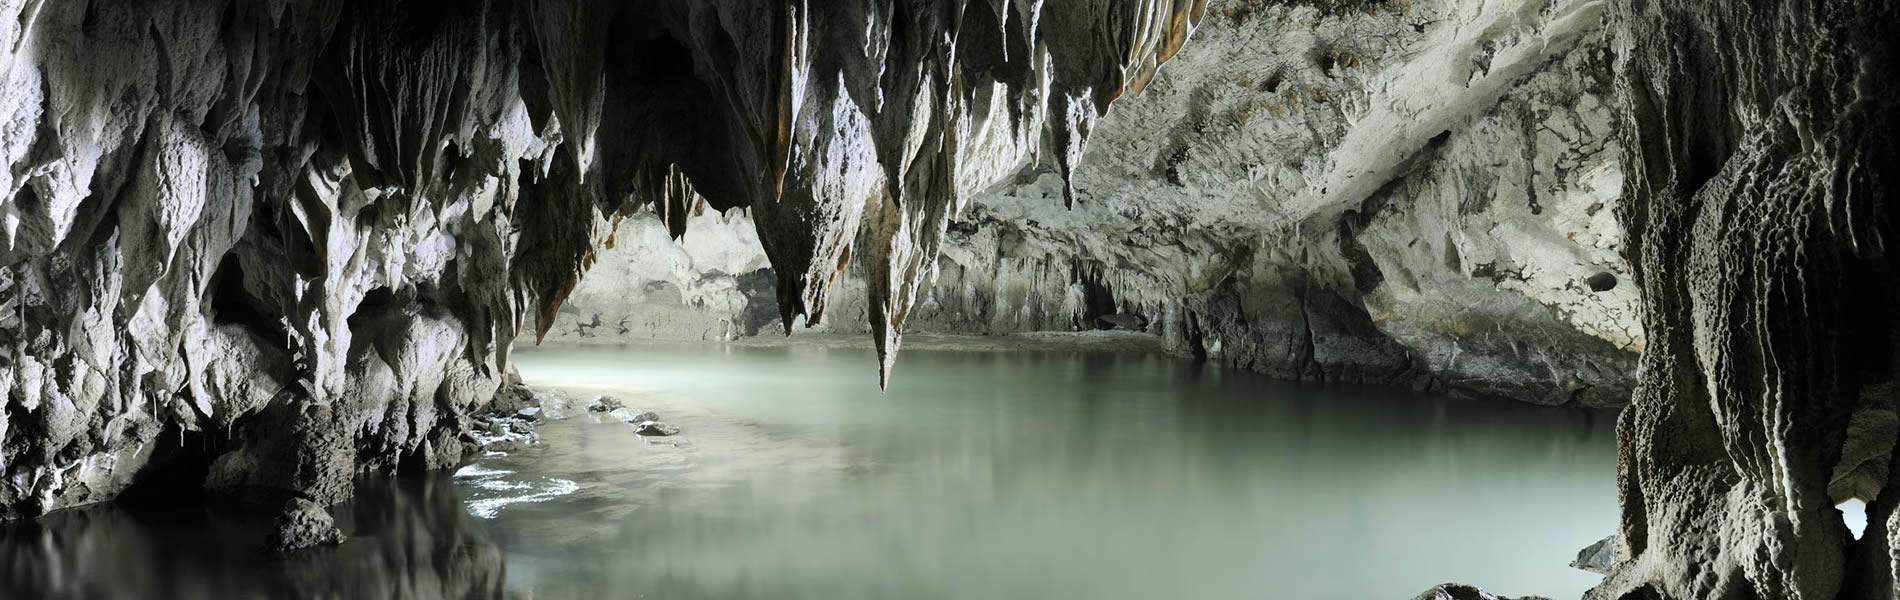 Caves of Pertosa-San Pietro al Tanagro